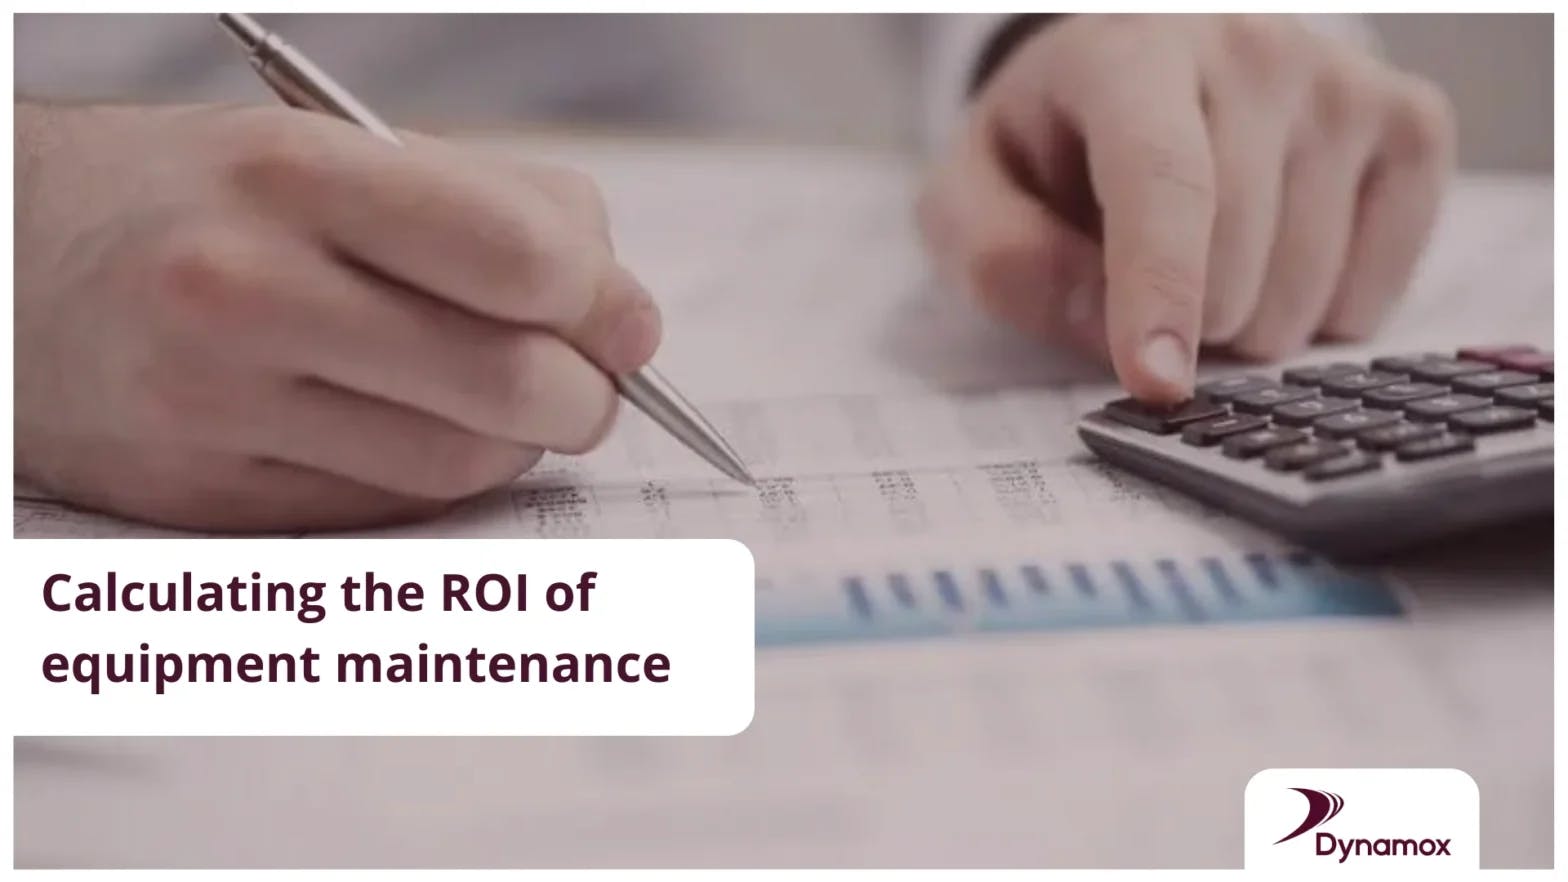 Calculating the ROI of equipment maintenance